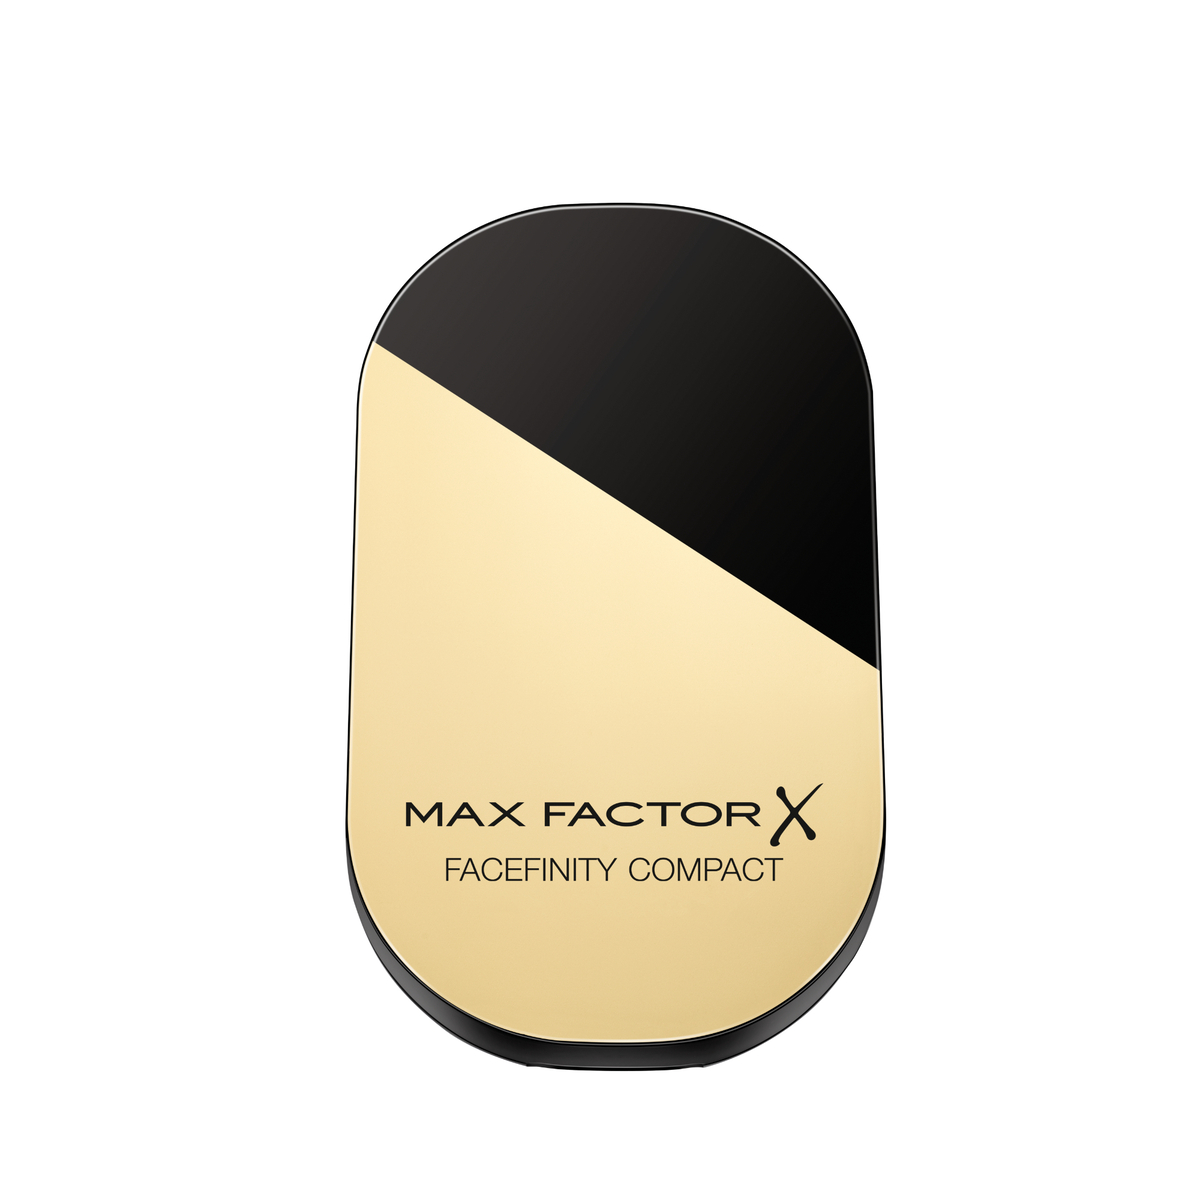 Max Factor Facefinity Compact Foundation Pressed Powder Warm Toffee 083, 10 g, 0.34 fl oz